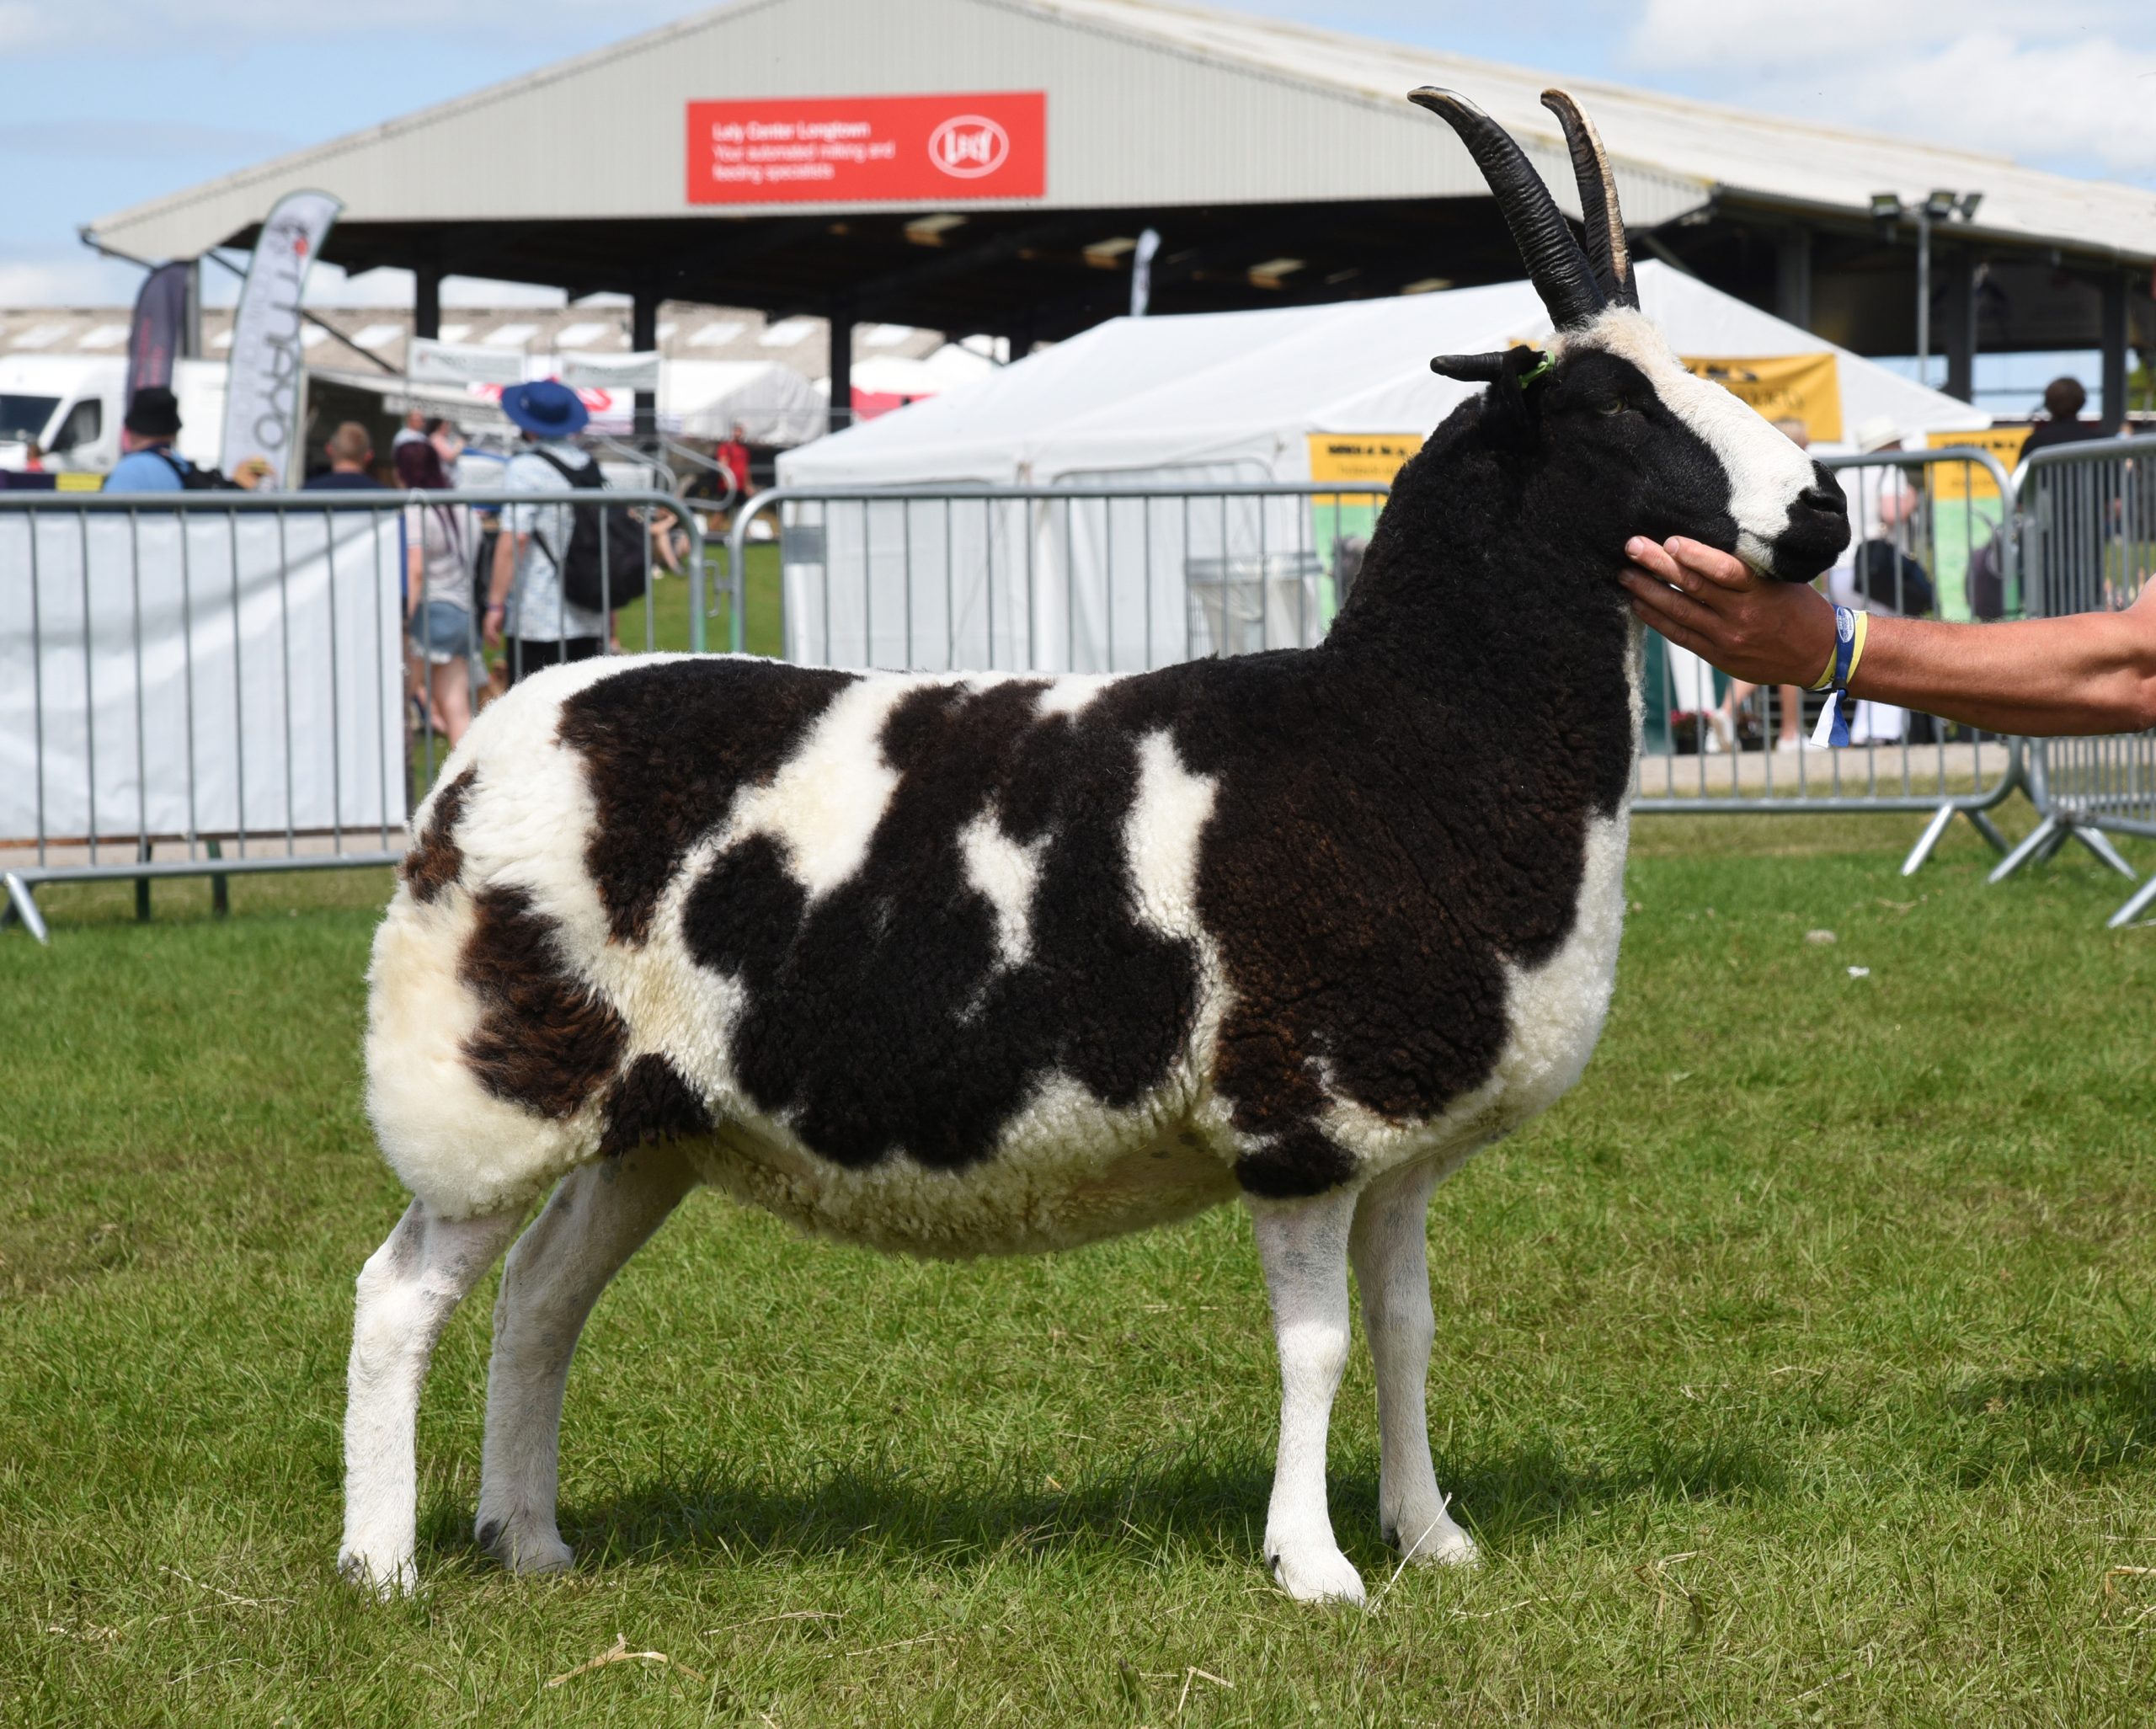 Blackbrook Sharon – Great Yorkshire Show Champion 2021, Multi breed champion